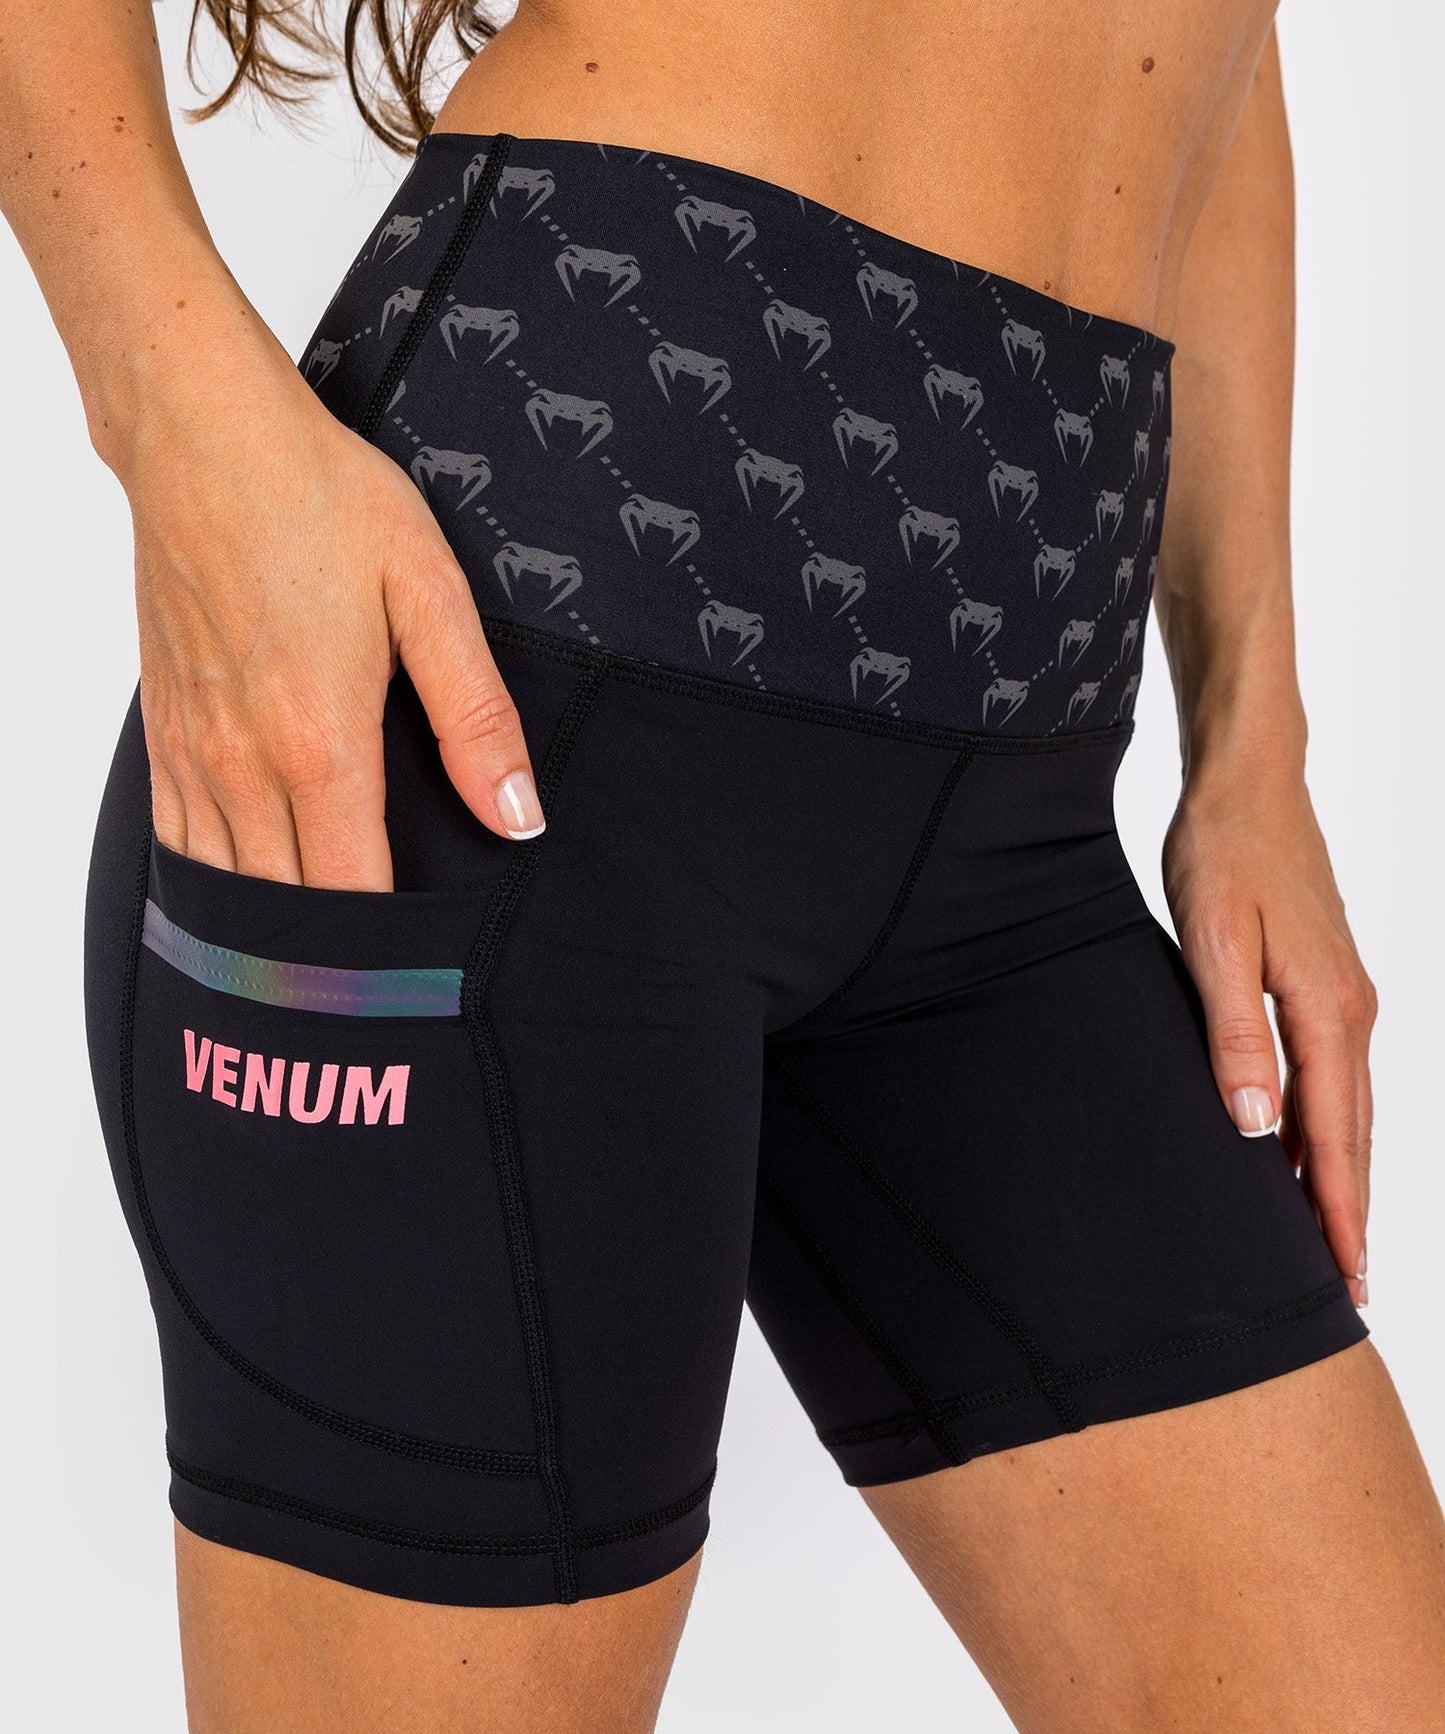 Venum Monogram Compression Shorts - For Women - Black/Pink Gold